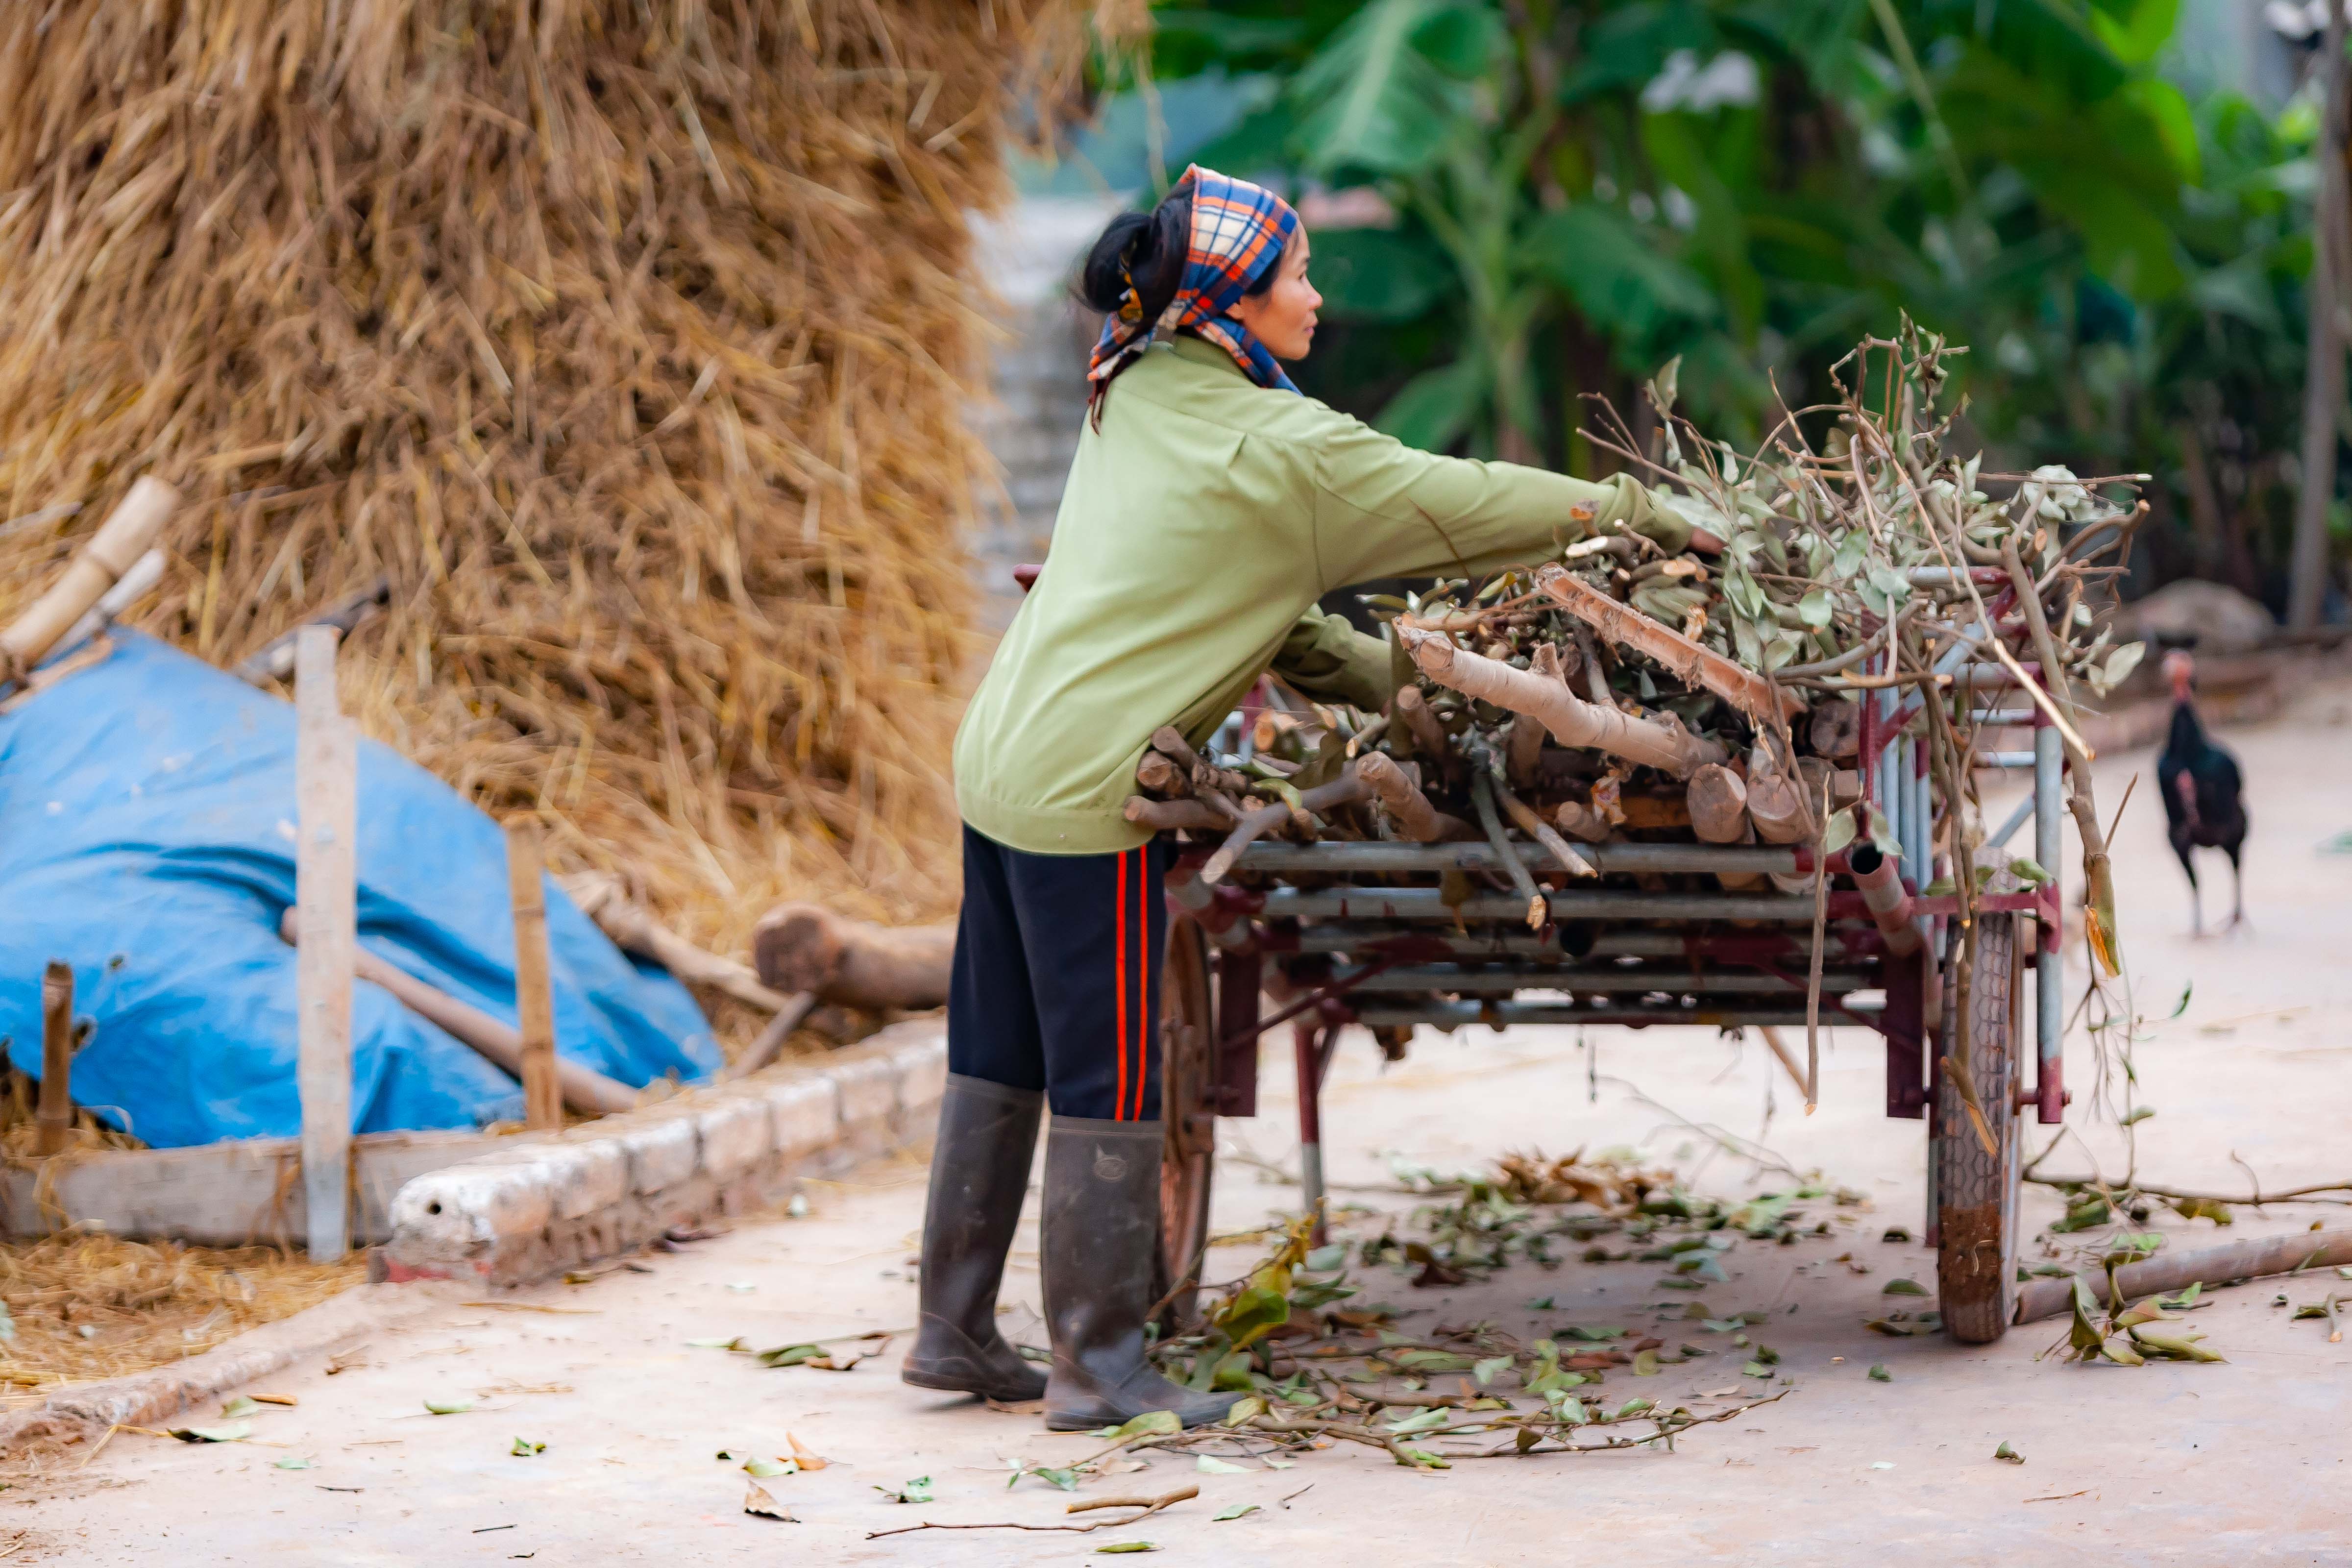 Vietnam, Bac Giang Prov, Wood Cart, 2010, IMG 4434